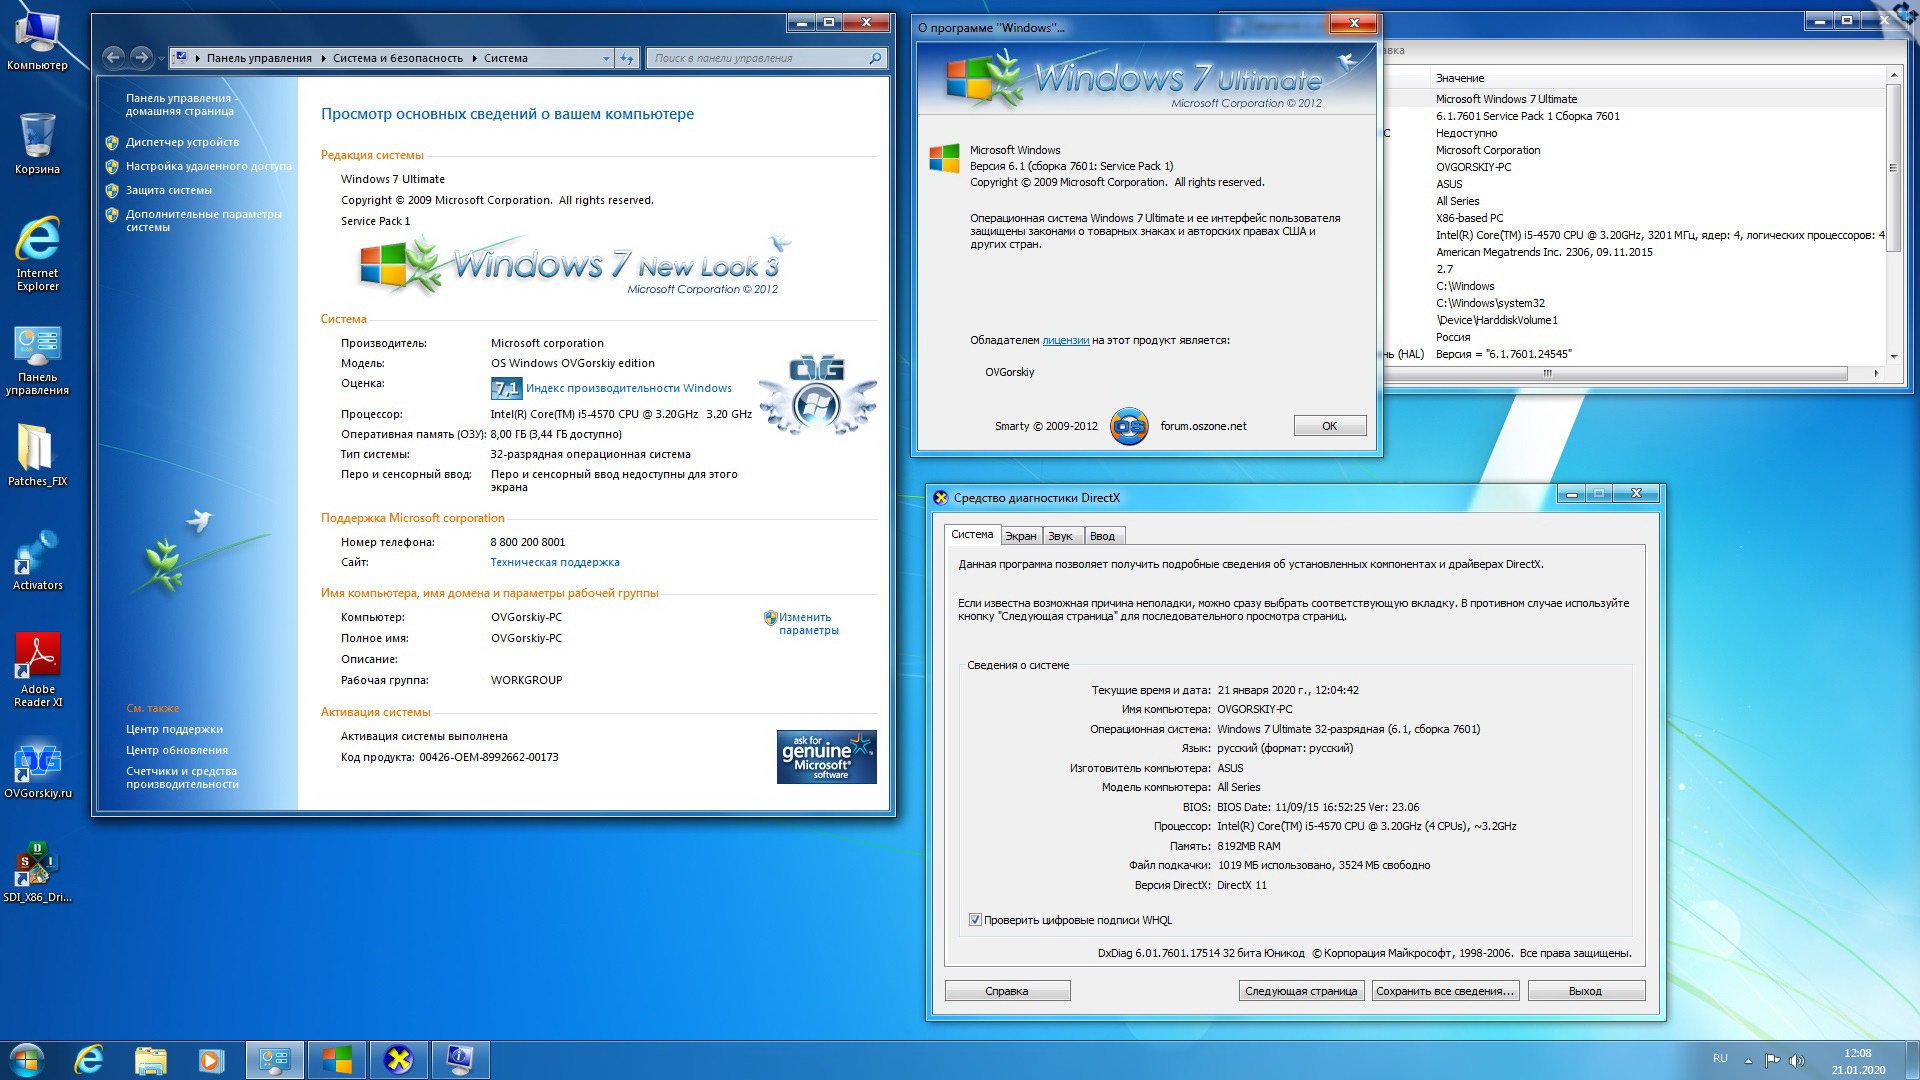 Сборка 7601 активатор. Windows 7. Виндовс 7 максимальная про версия. Windows 7 64 bit. Сборки виндовс 7.